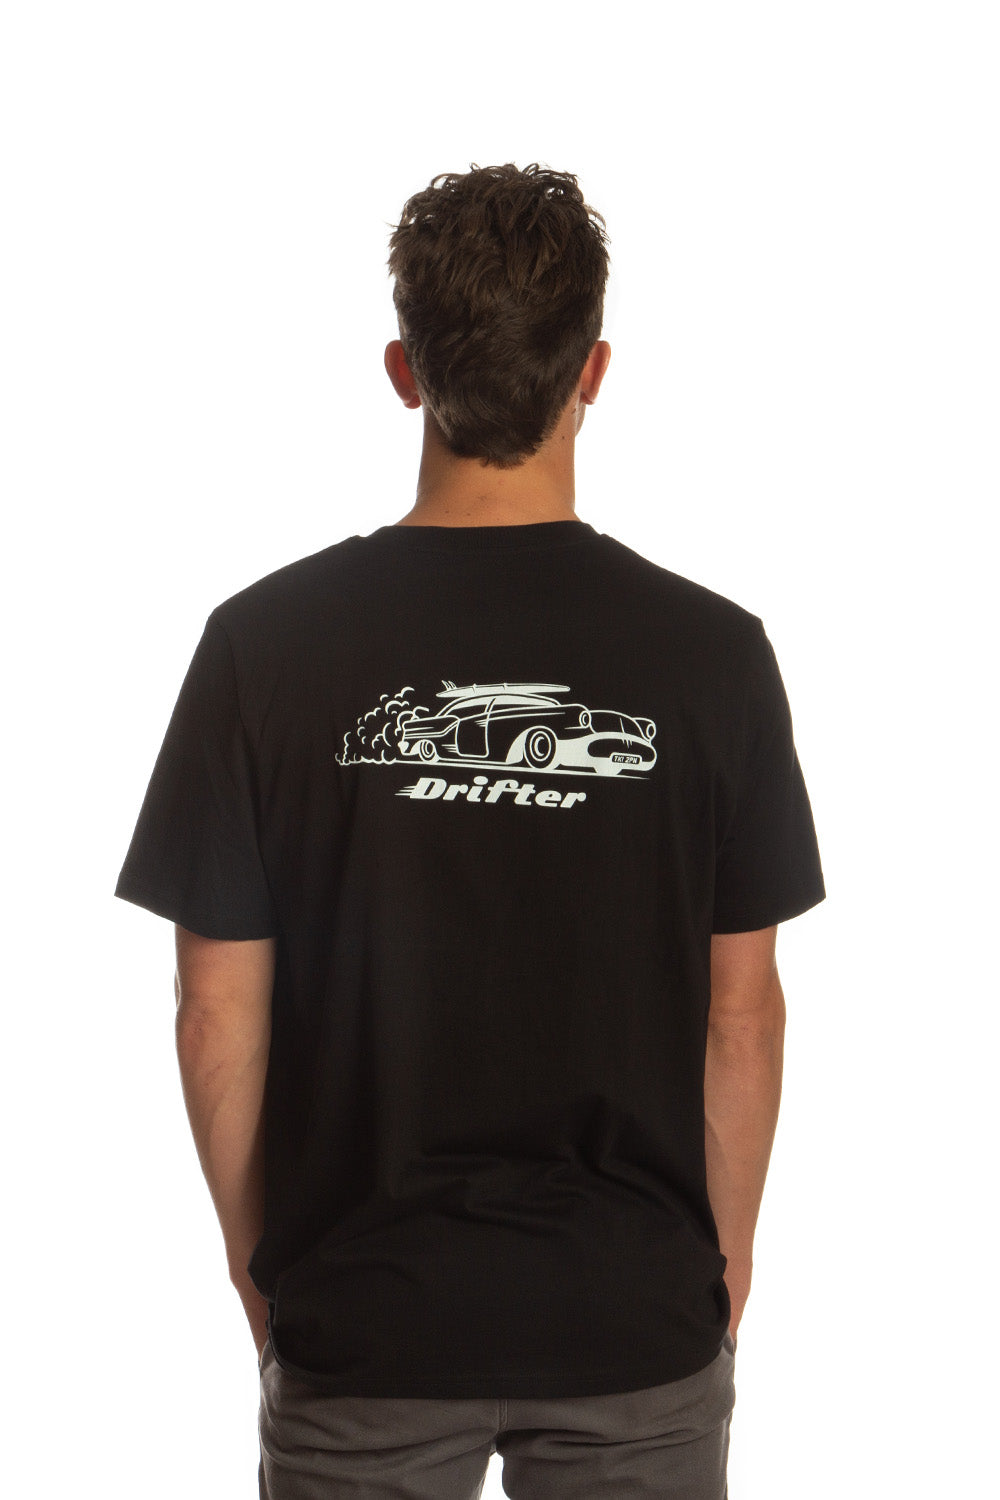 Tiki Drifter Short Sleeve T-Shirt Black